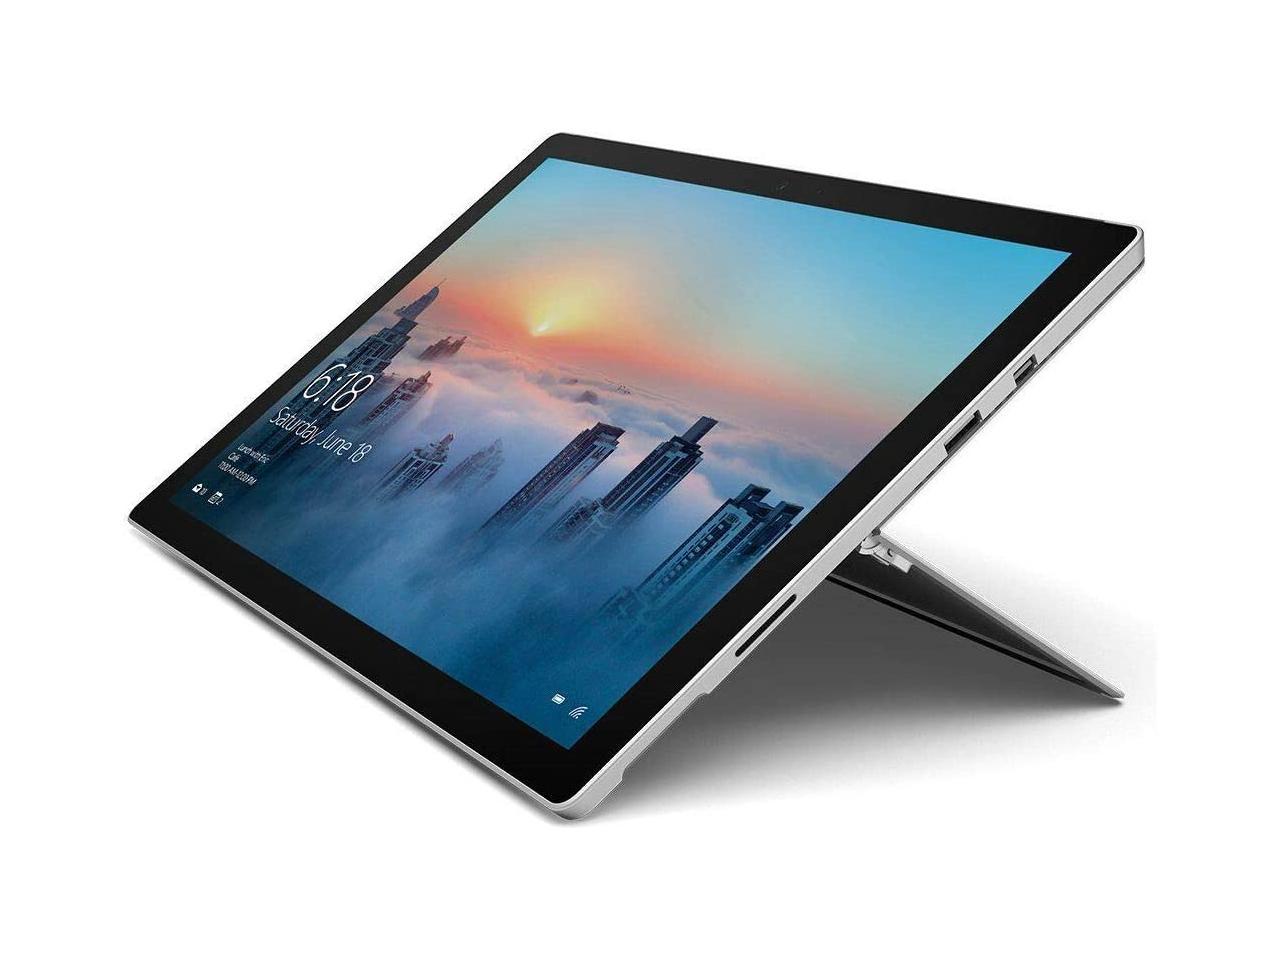 Refurbished Microsoft Grade A Surface Pro 4 Tablet 12 3 Touchscreen 2736 X 14 Resolution Intel Core M3 Processor 4gb Ram 128gb Ssd Windows 10 Pro 64 Bit Newegg Com